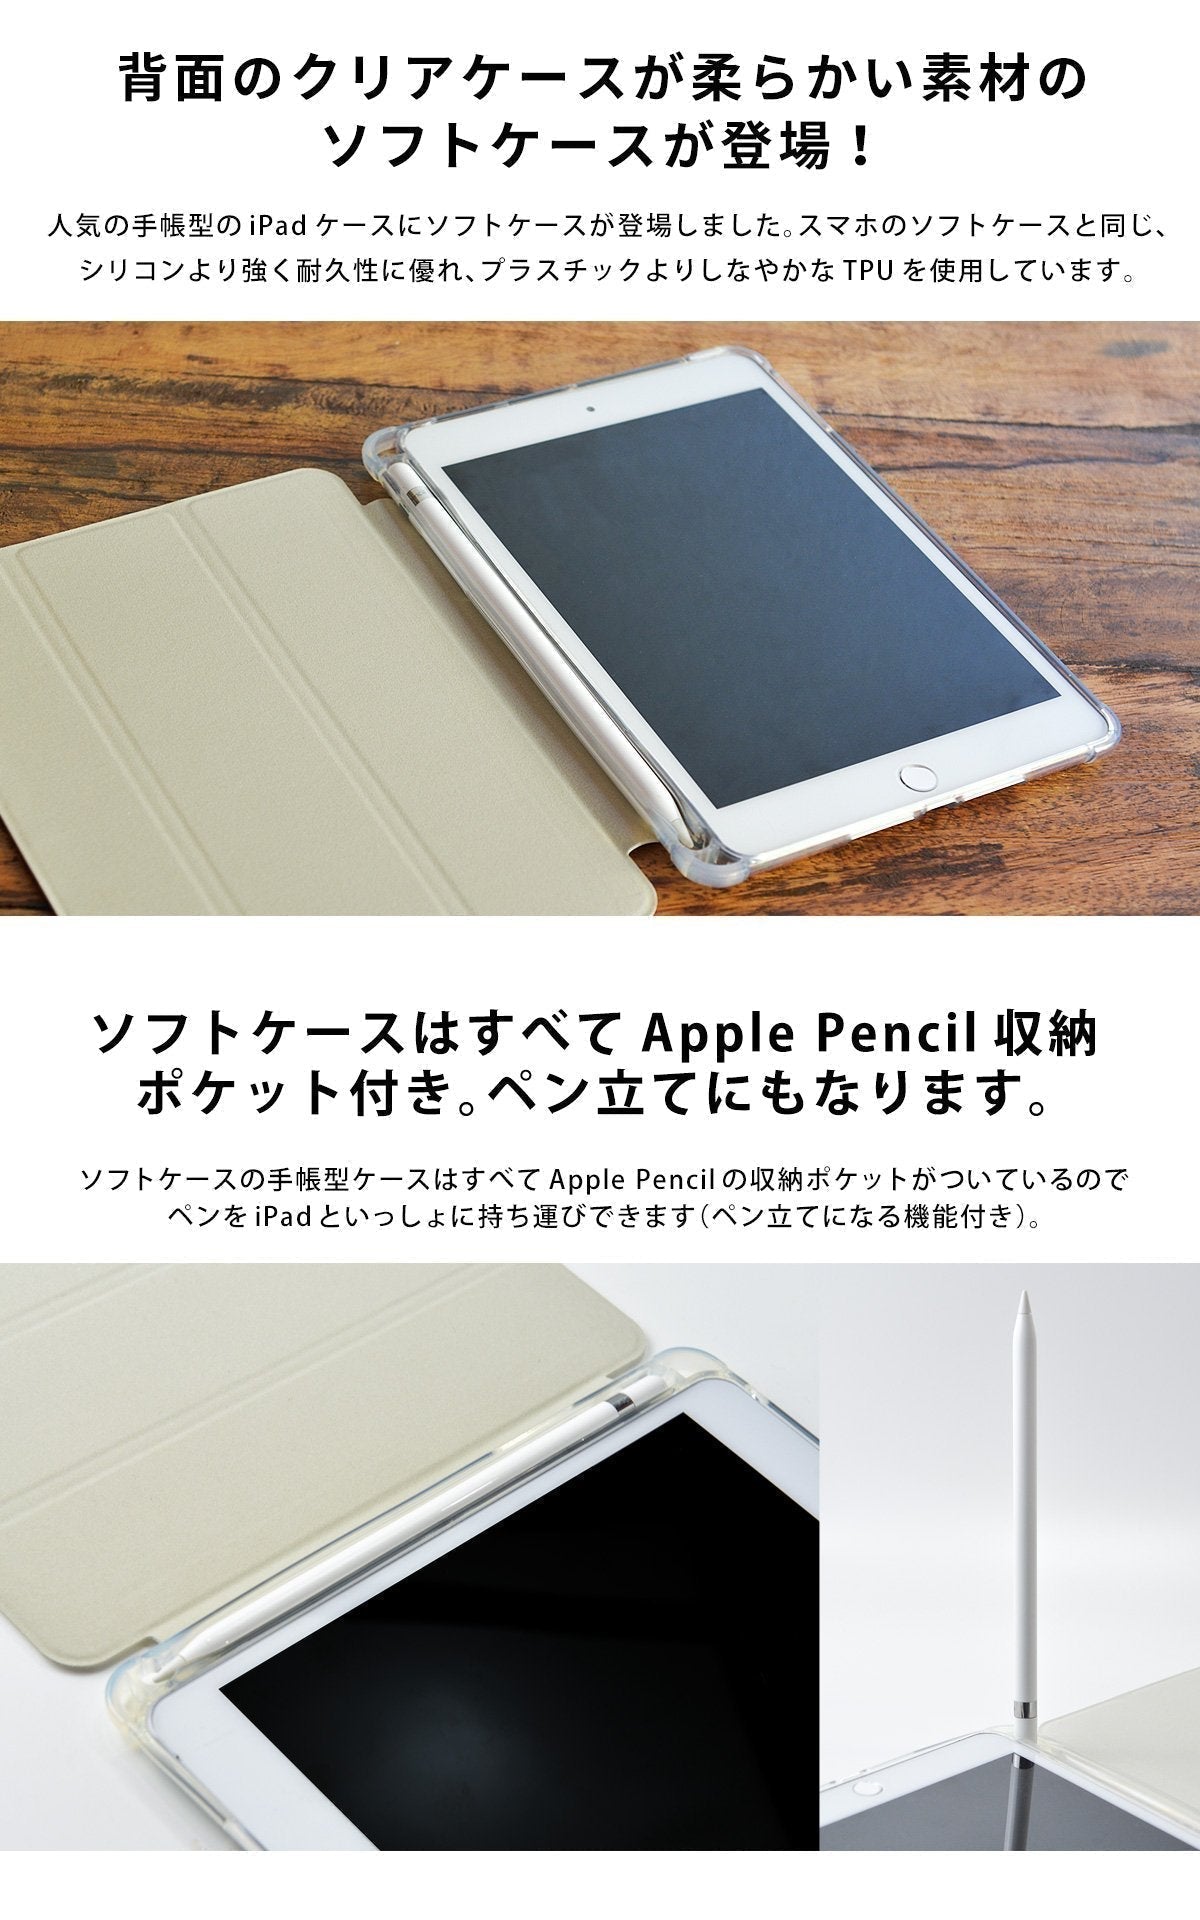 iPadケース iPad mini5 mini4 ソフトケース赤iPadスタンド - iPad